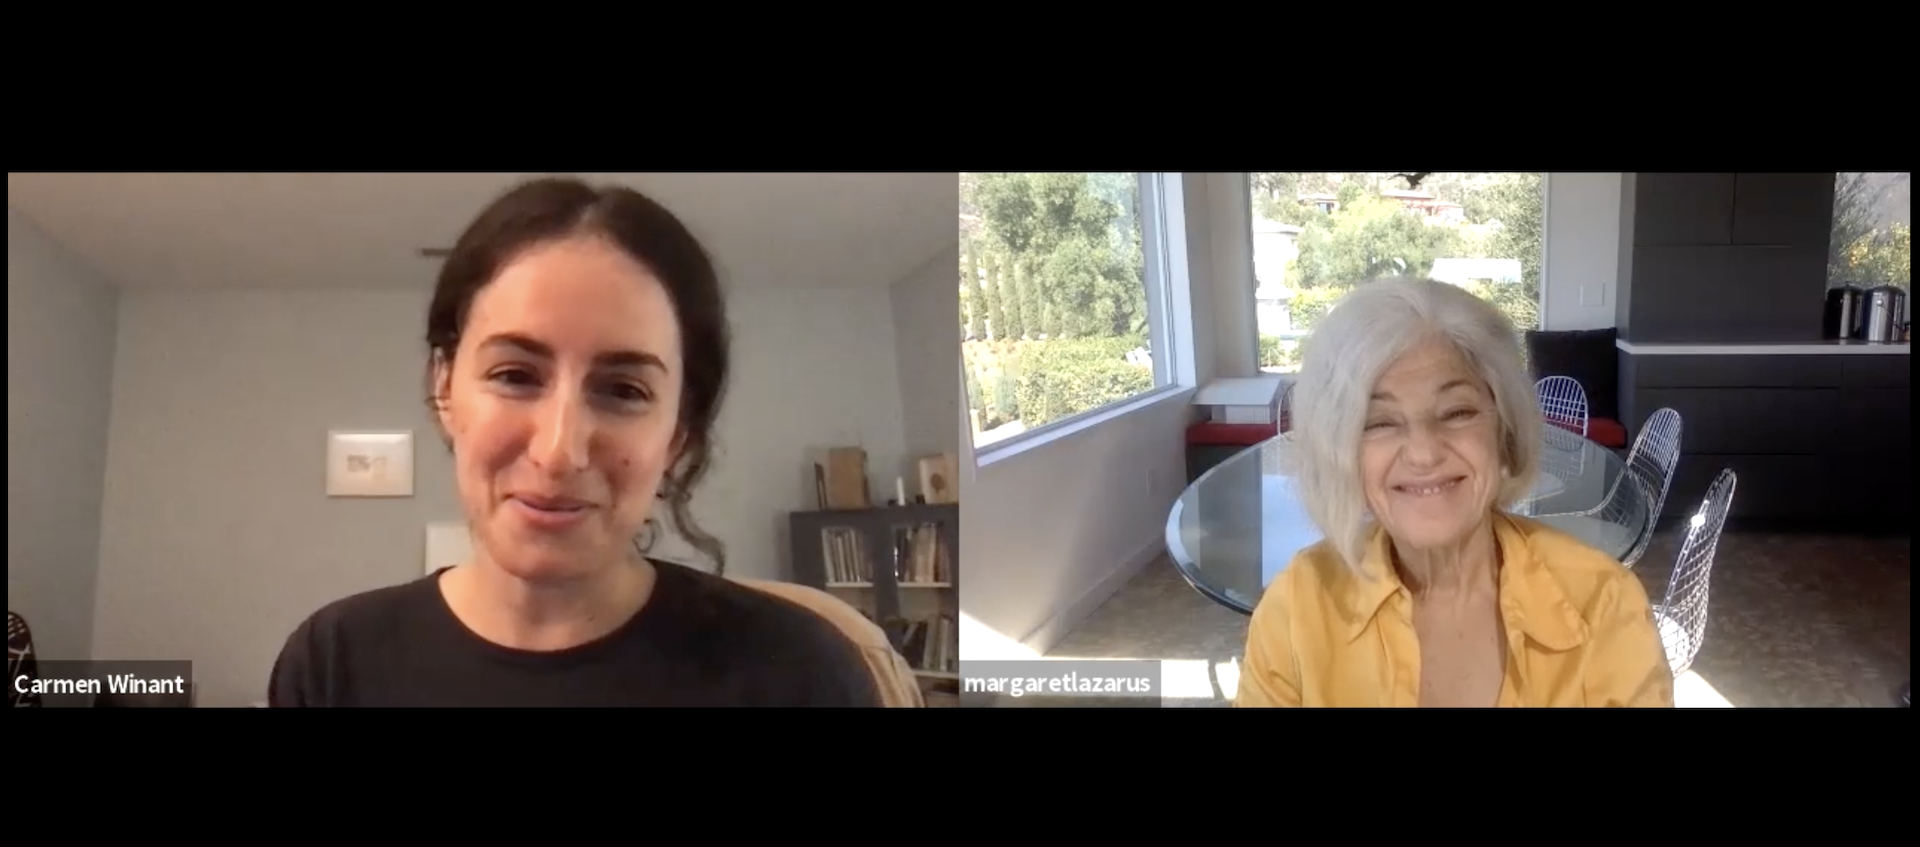 Screen capture of a Zoom video conversation between artist Carmen Winant and filmmaker Margaret Lazarus